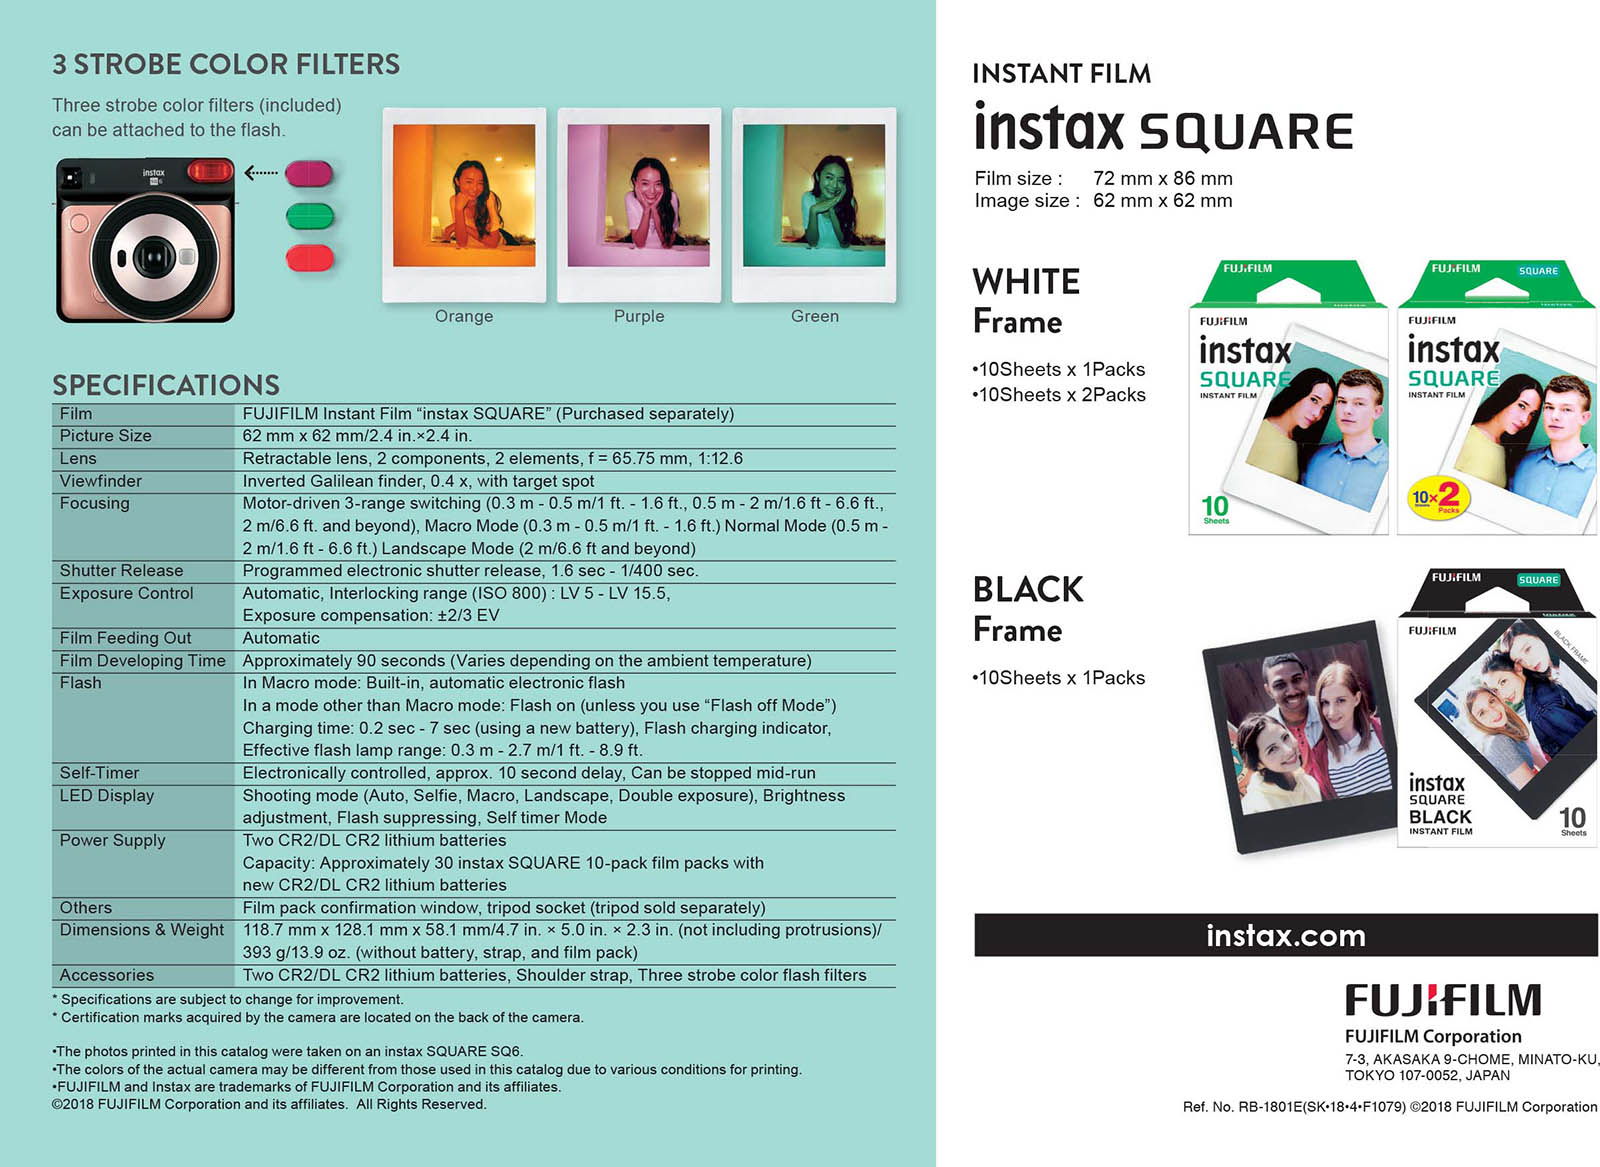 Fujifilm Instax SQ6 Specifications